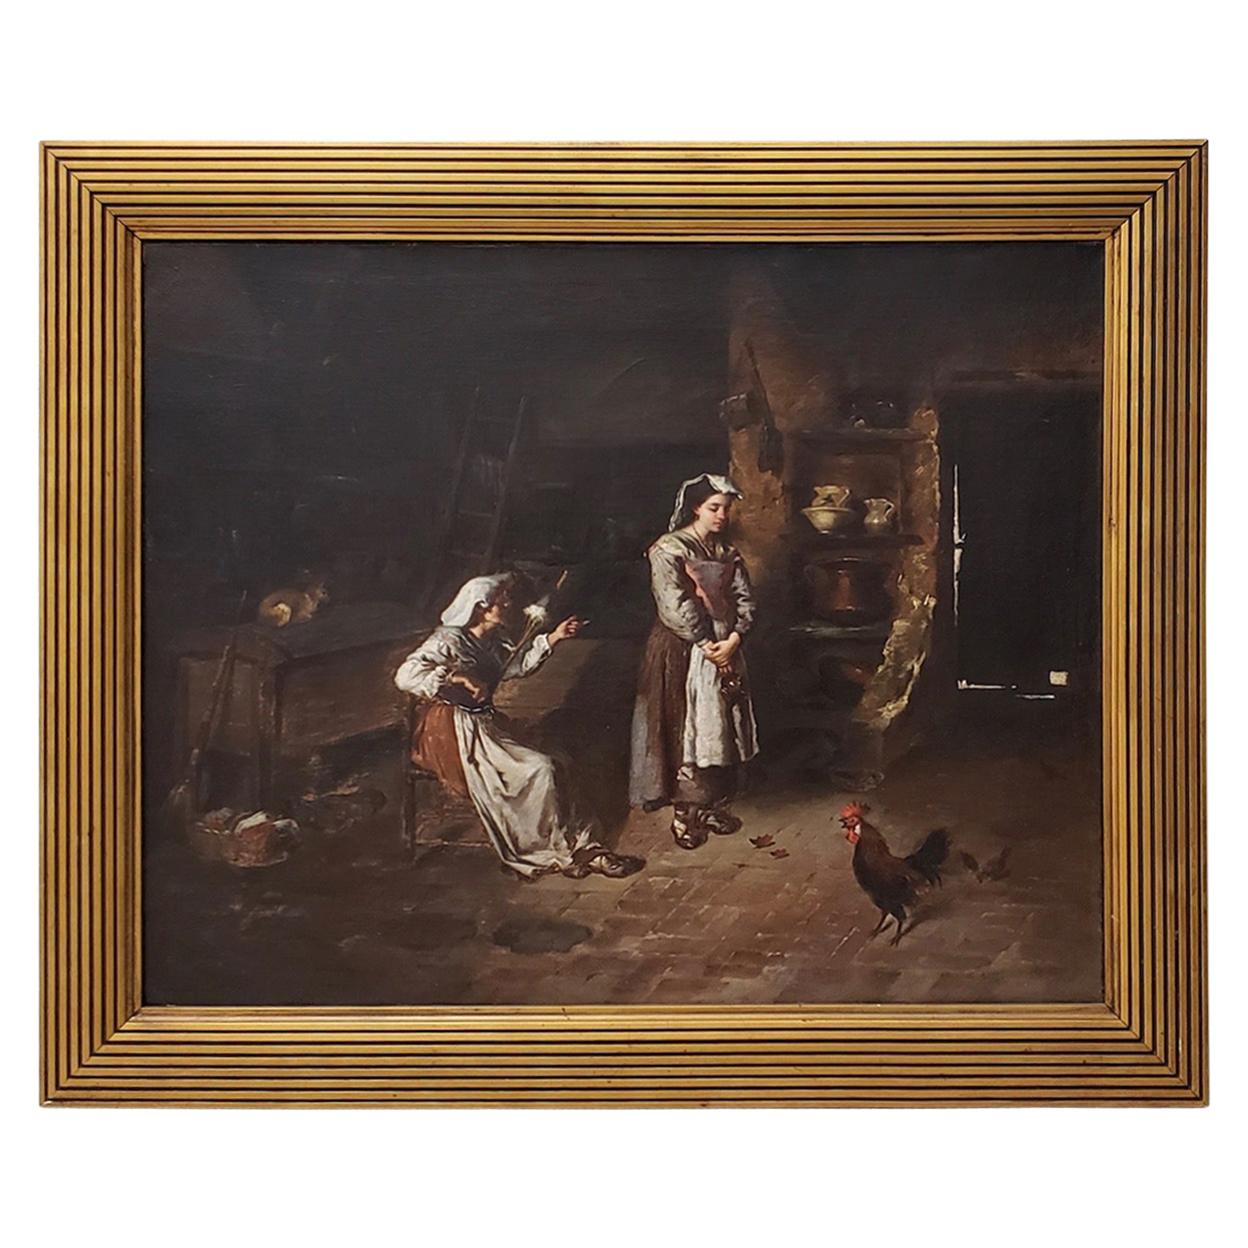 Joseph Mazzuloni 'Italy' "The Broken Jug" Original Oil Painting, circa 1890s For Sale